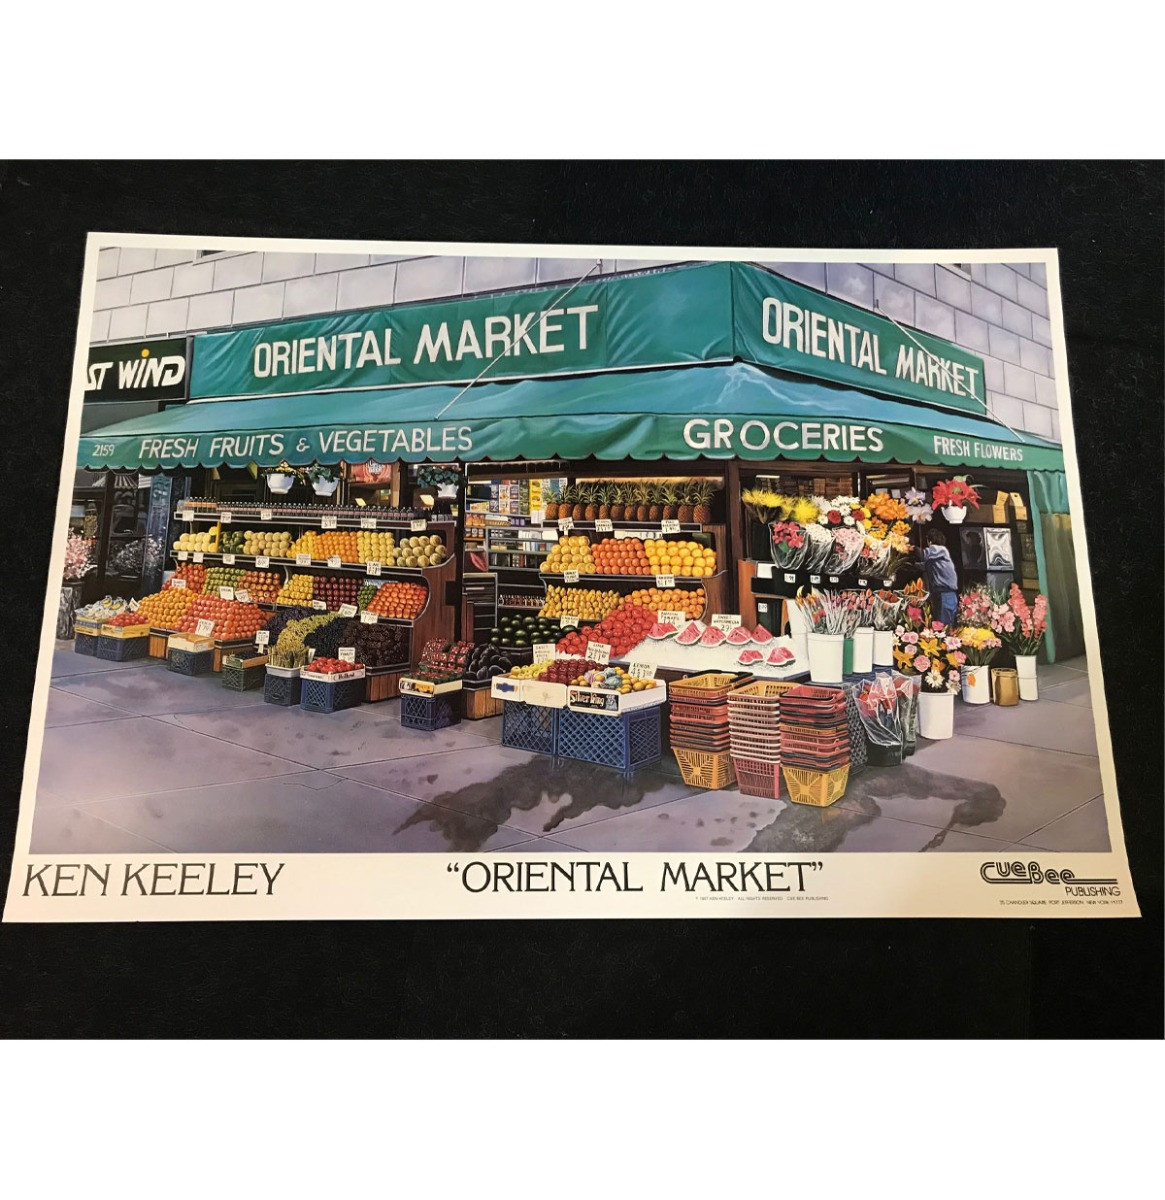 Ken Keeley "Oriental Market" Poster - 1987 - 60 x 80 cm